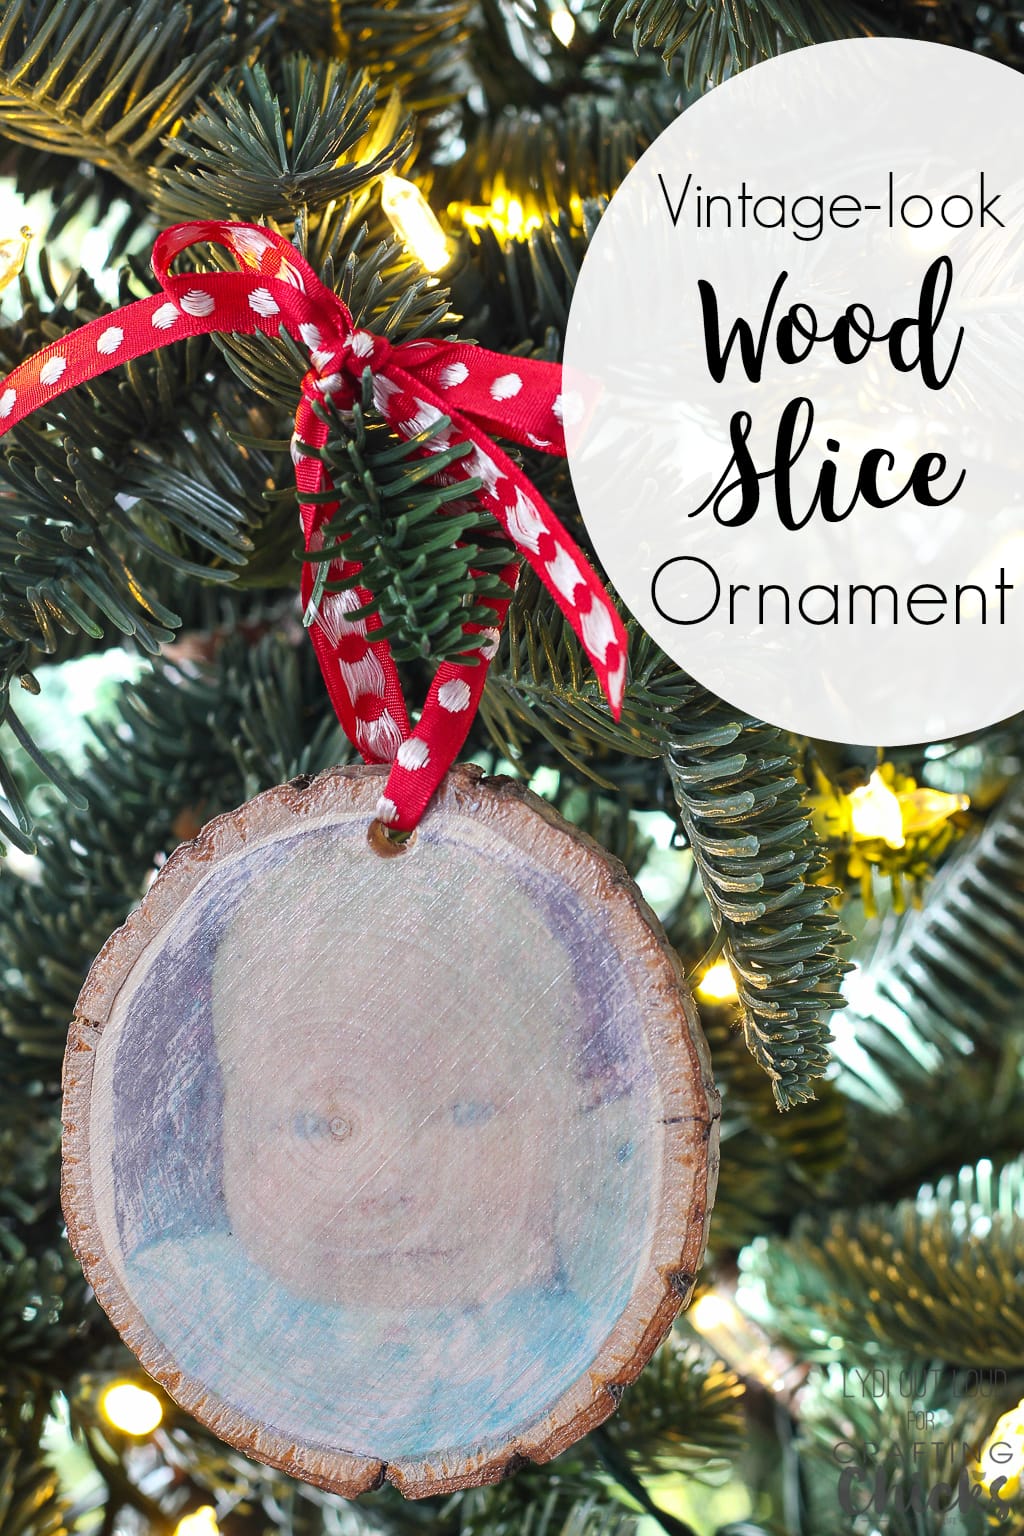 DIY Vintage-look Photo Transfer Wood Slice Christmas Ornament #diyornament #woodslicecrafts #babysfirstchristmas